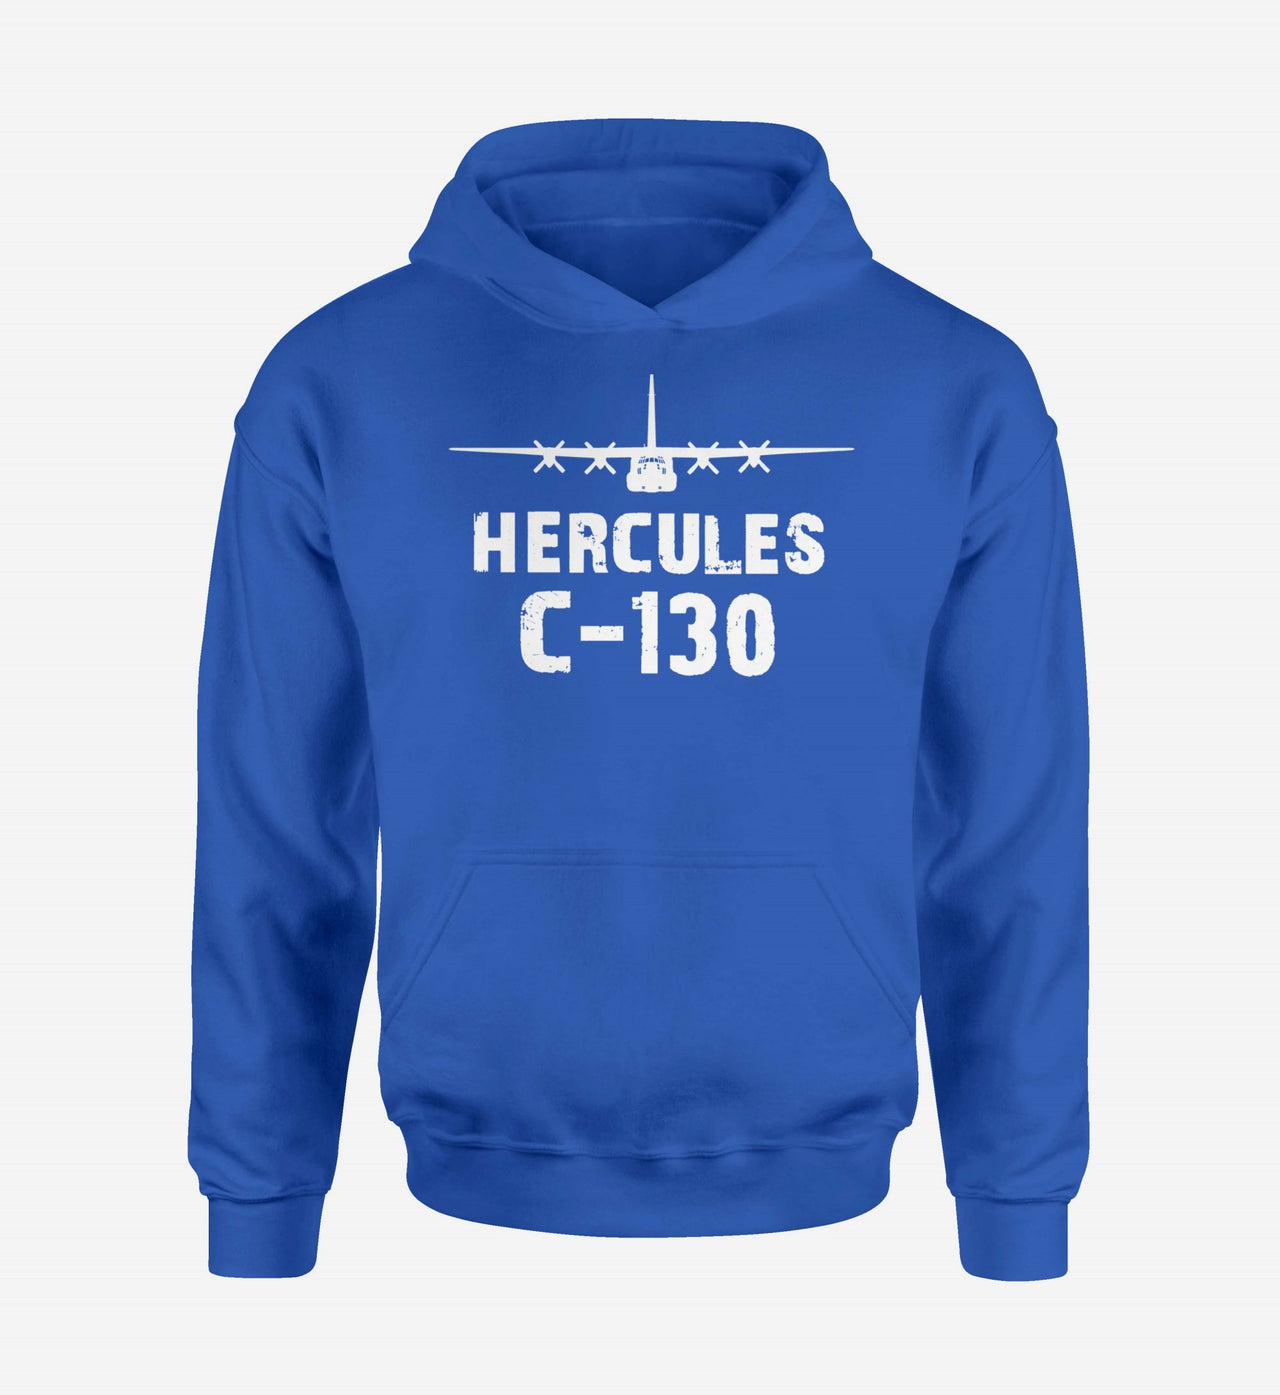 Hercules C-130 & Plane Designed Hoodies